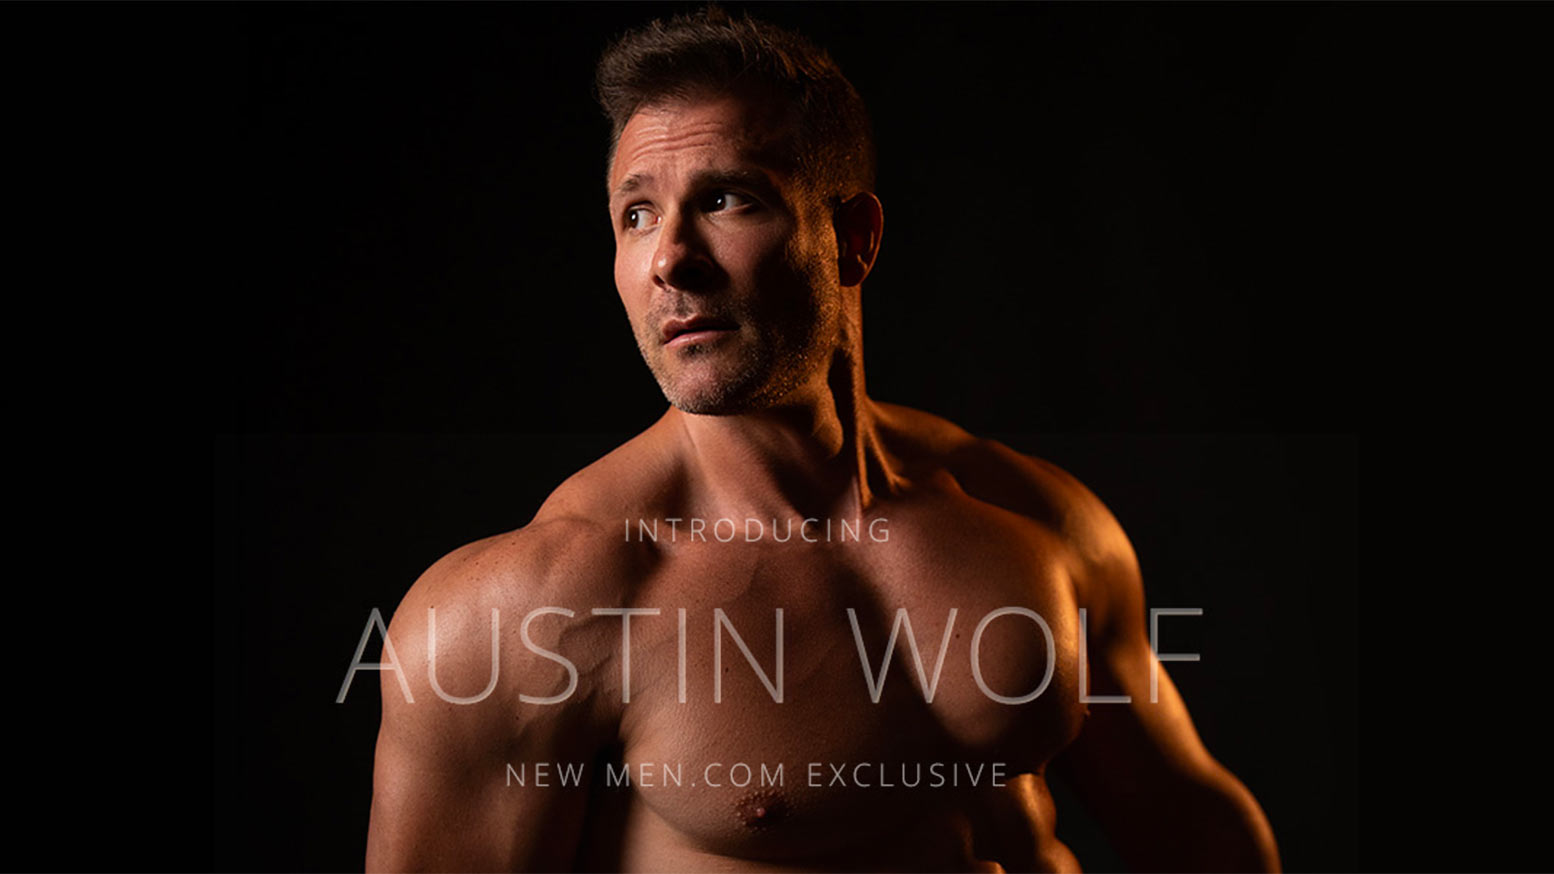 Introducing Austin Wolf